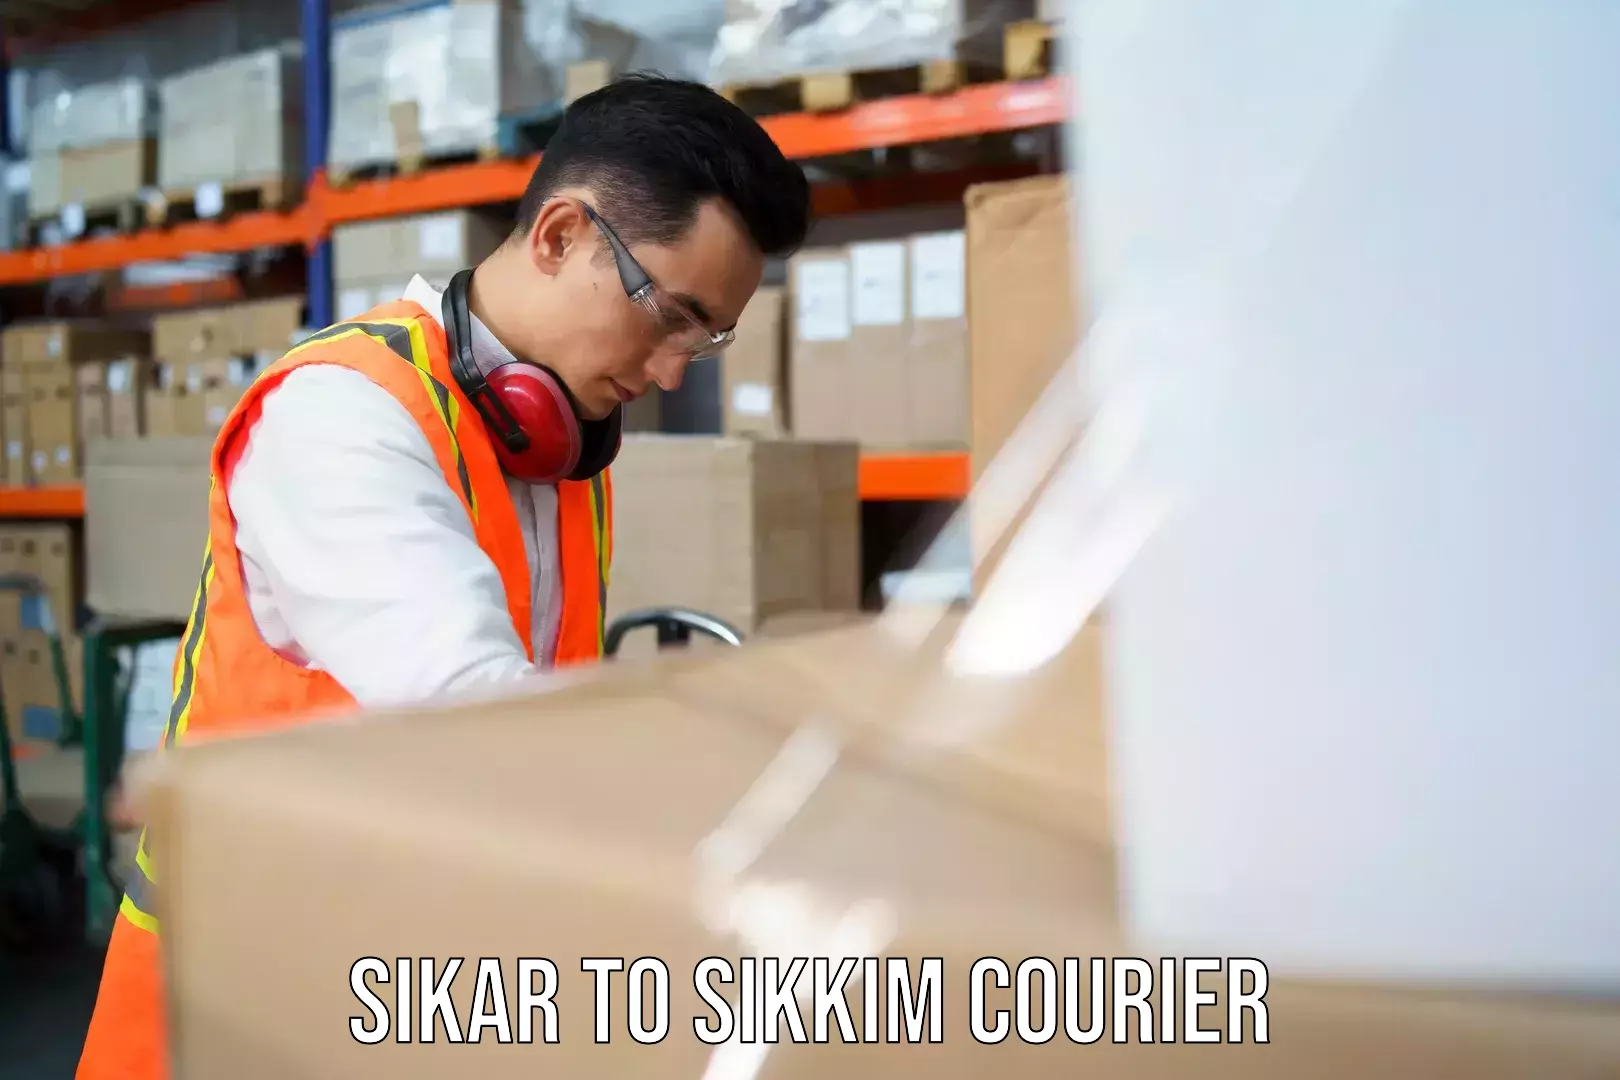 Efficient order fulfillment Sikar to Sikkim